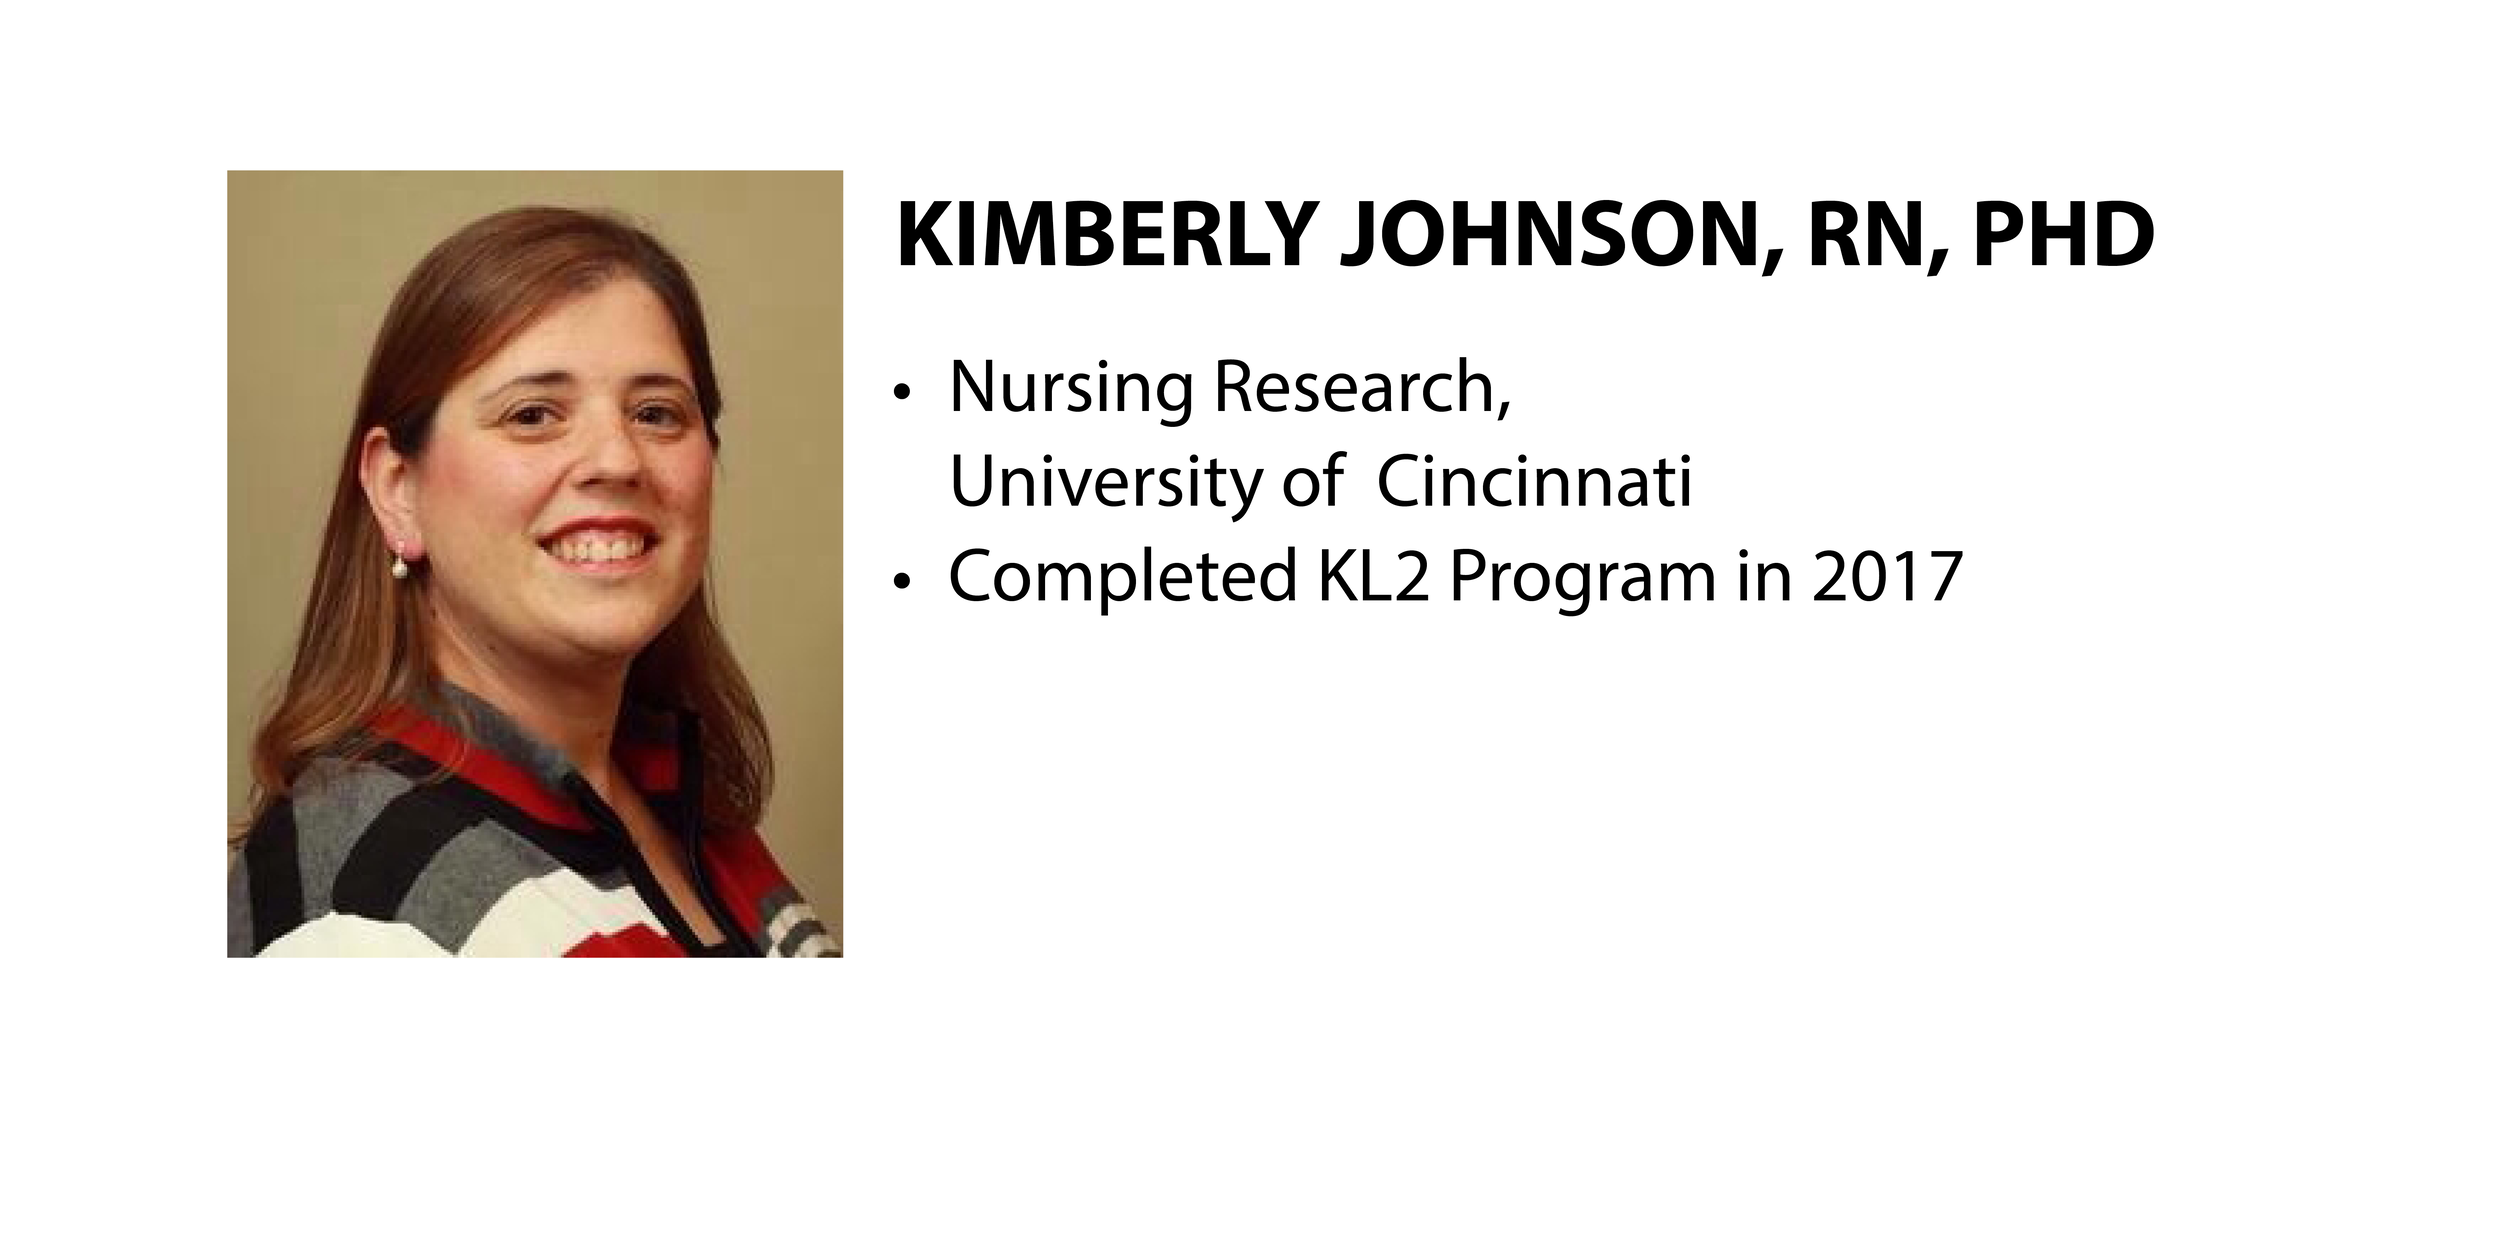 K Scholar Overview: Kimberly Johnson